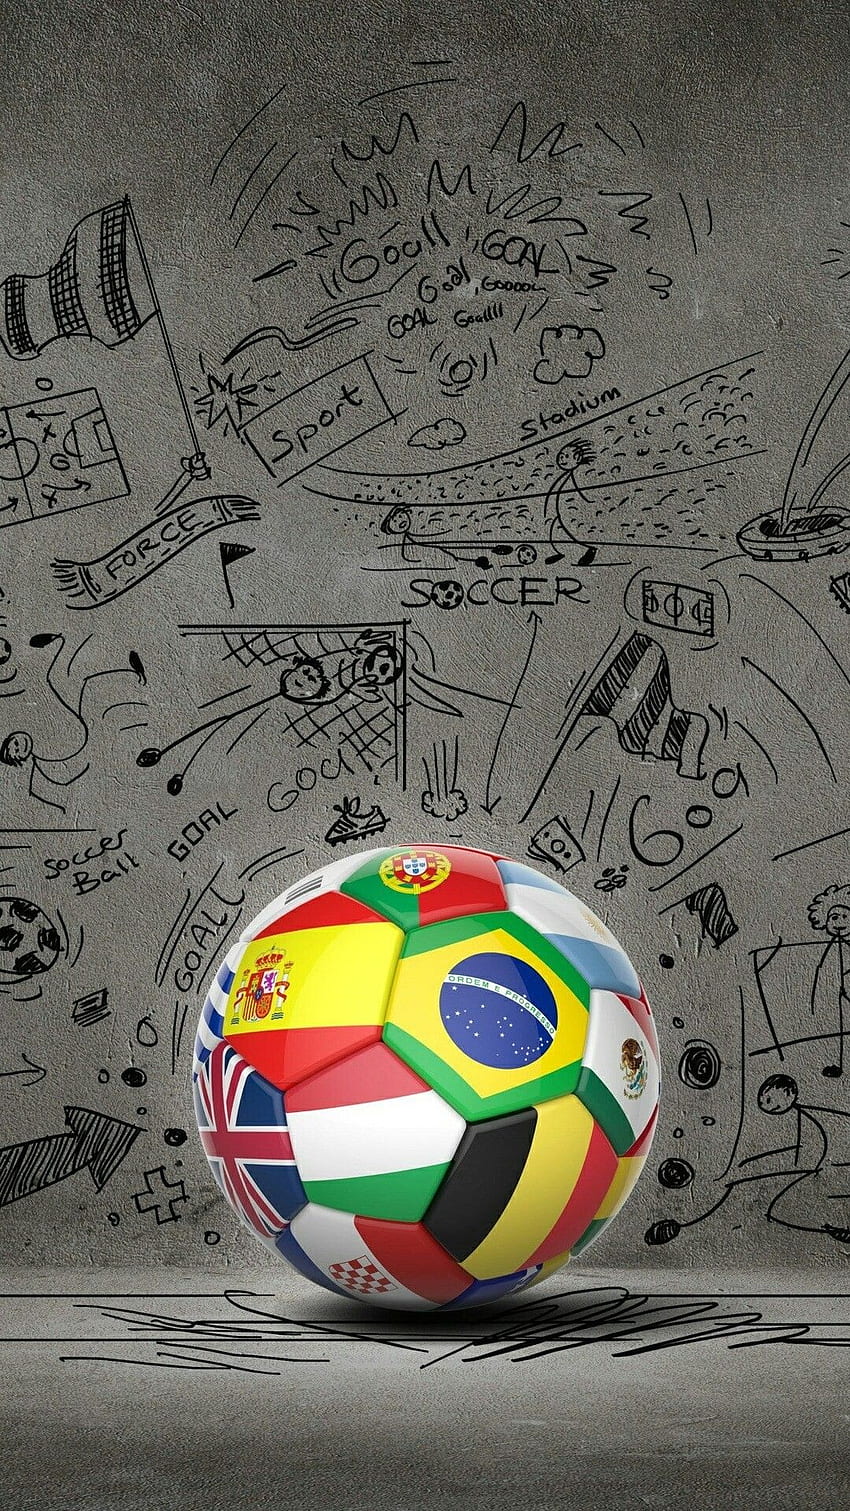 Wallpaper ID 398830  Sports Soccer Phone Wallpaper Ball 1080x1920 free  download